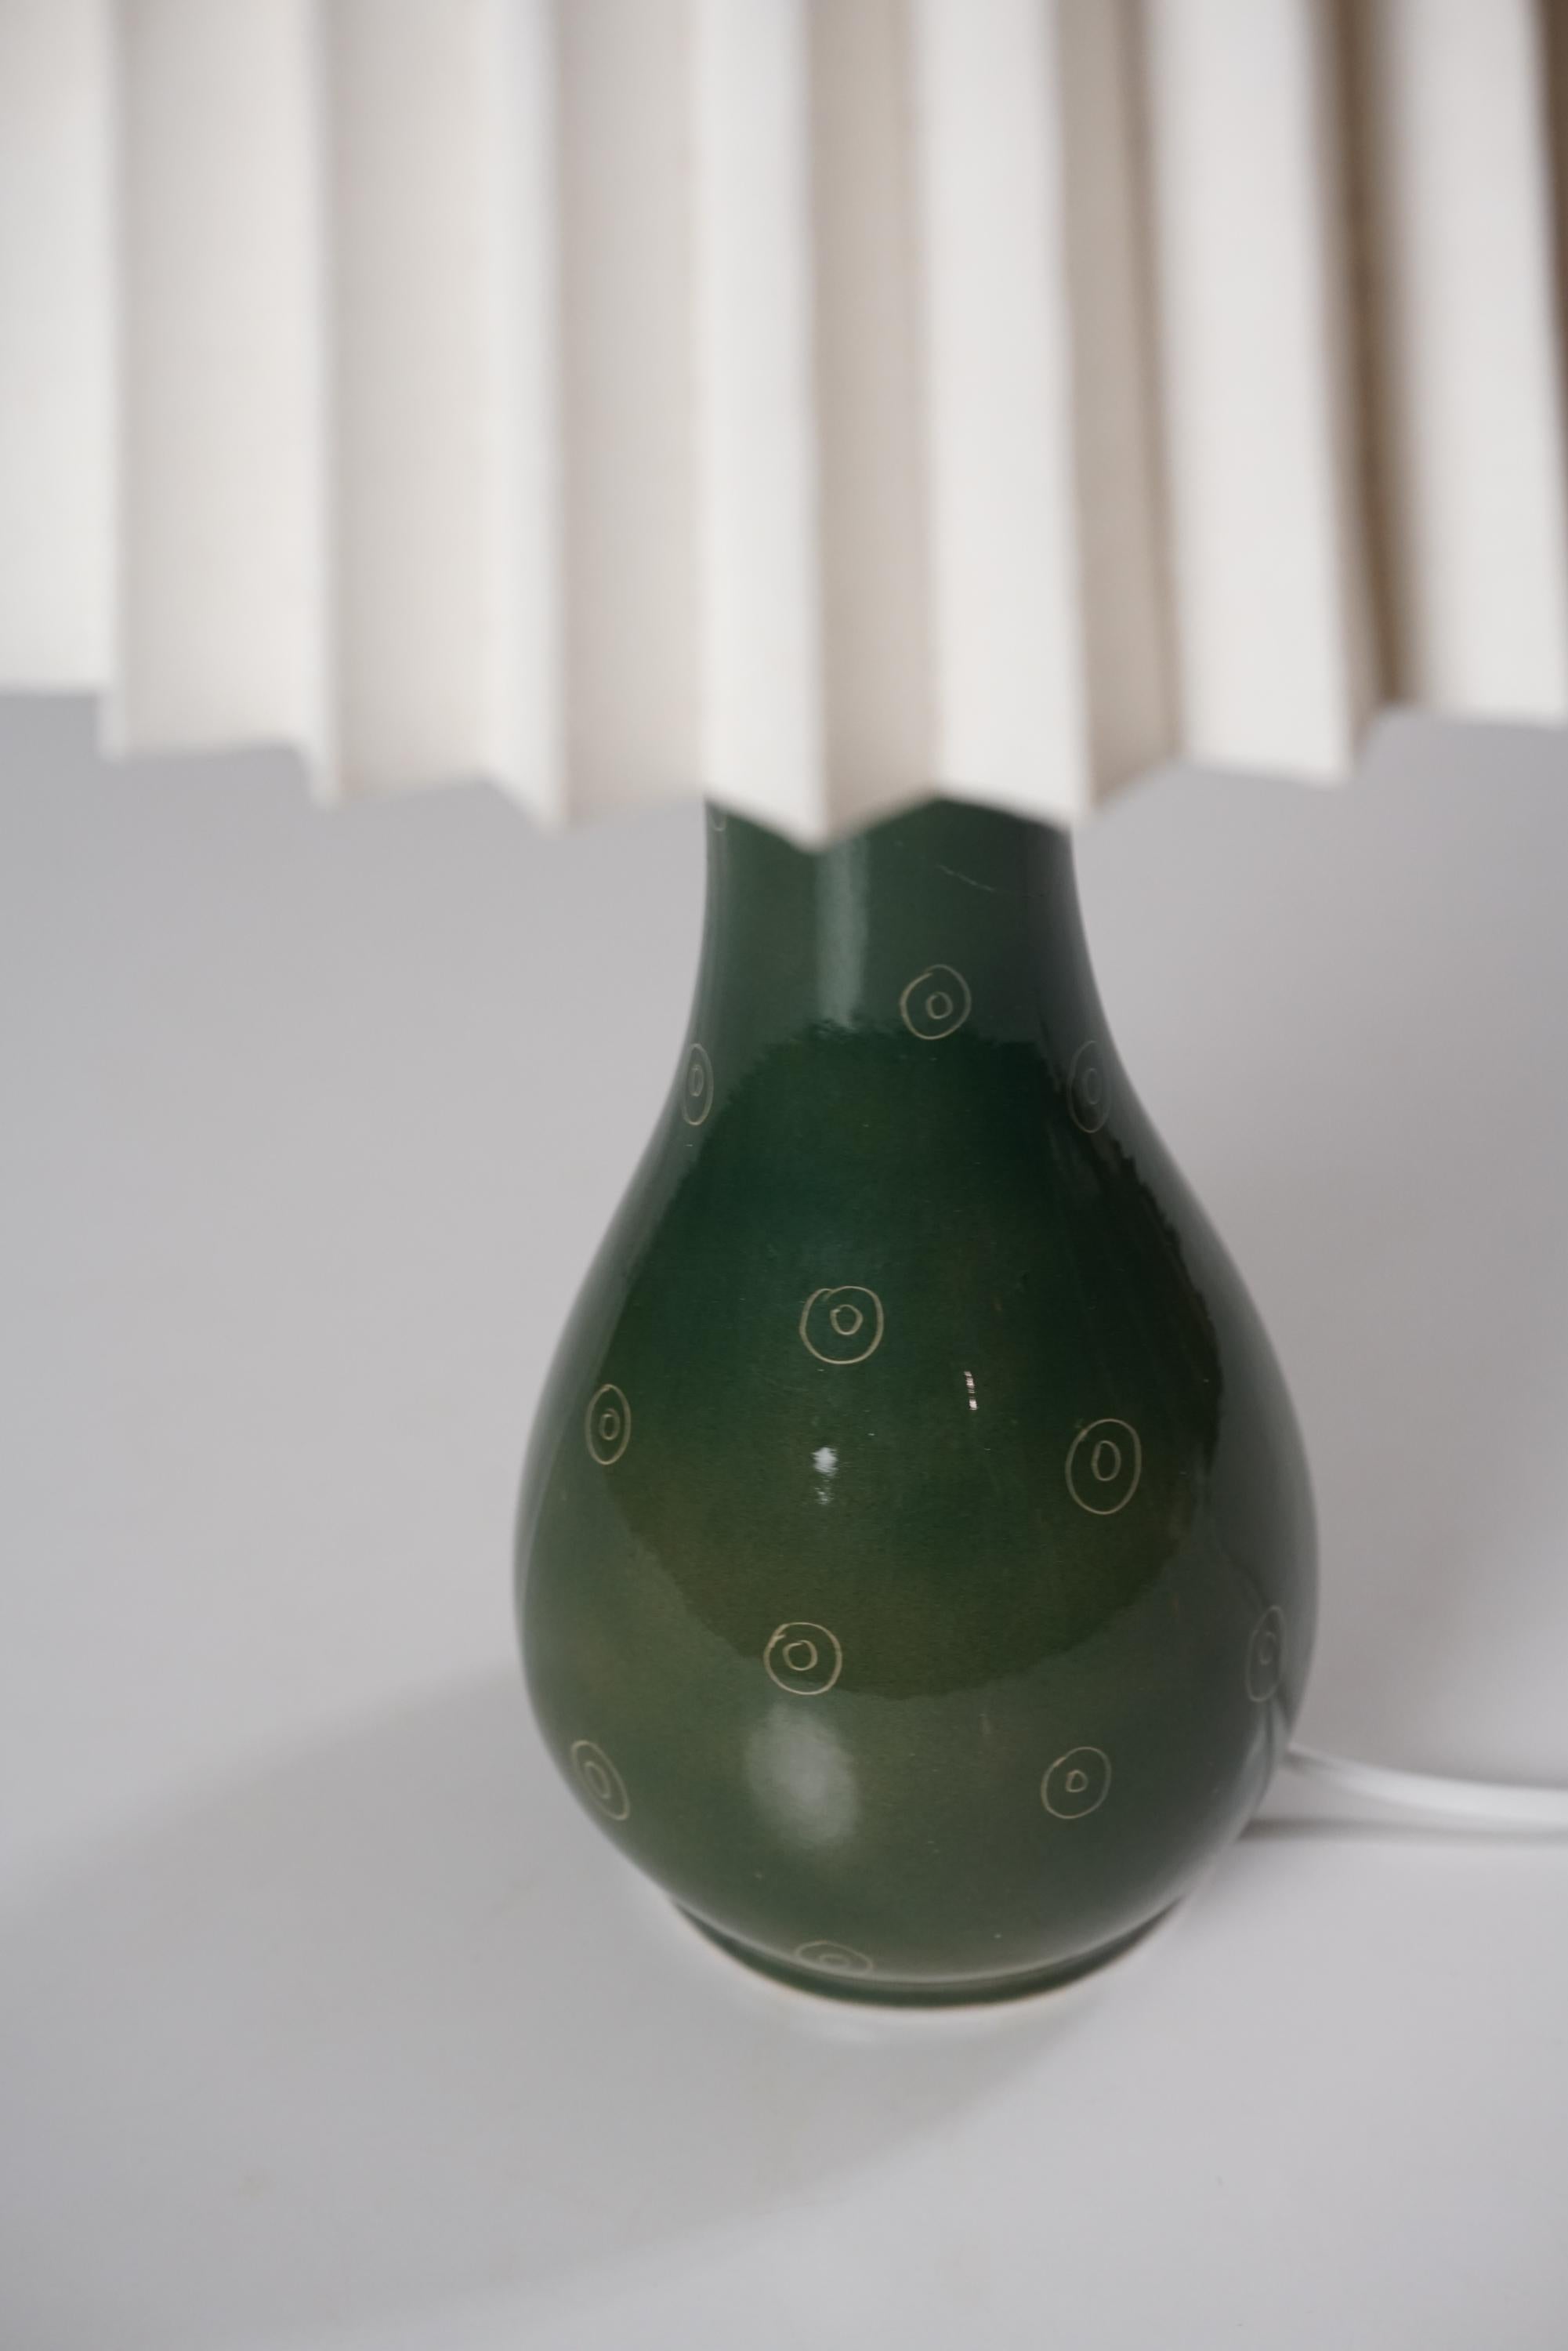 Toini Muona Ceramic Table Lamp, Arabia, 1950s In Good Condition For Sale In Helsinki, FI